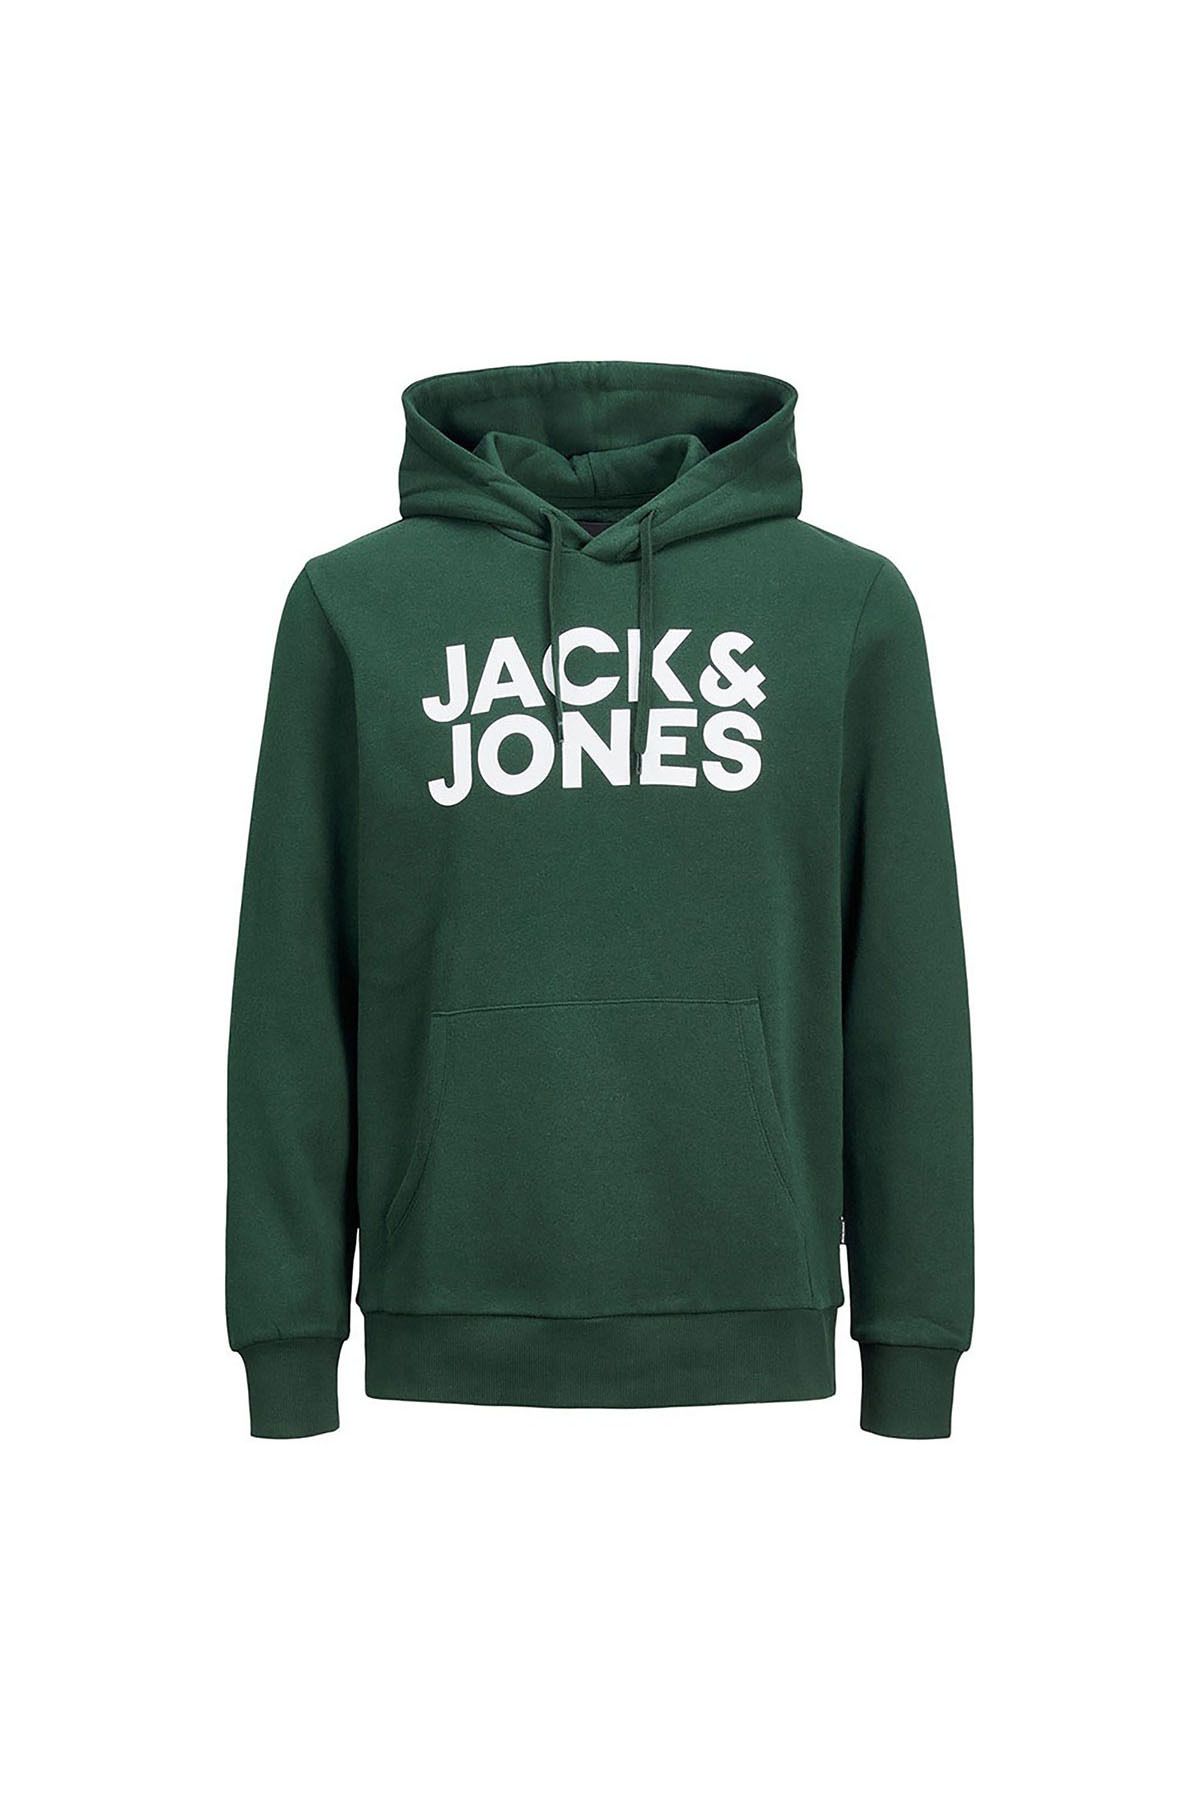 Jack & Jones Erkek Kapşonlu Sweatshirt 12152840